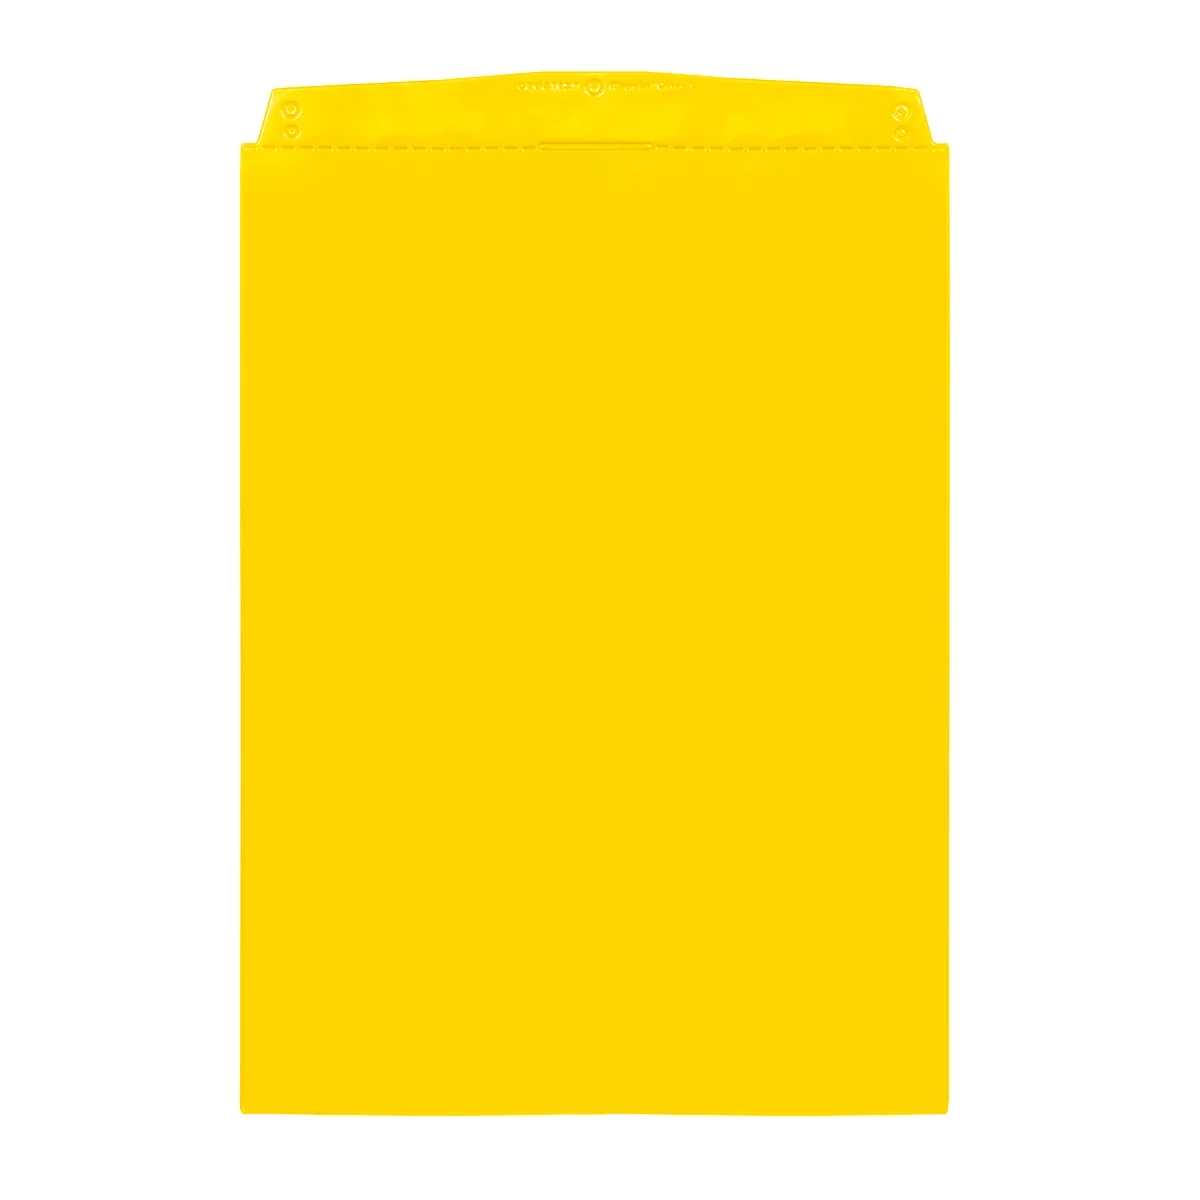 Fundas transparentes Orgatex, A4 vertical, amarillo, 50 uds.